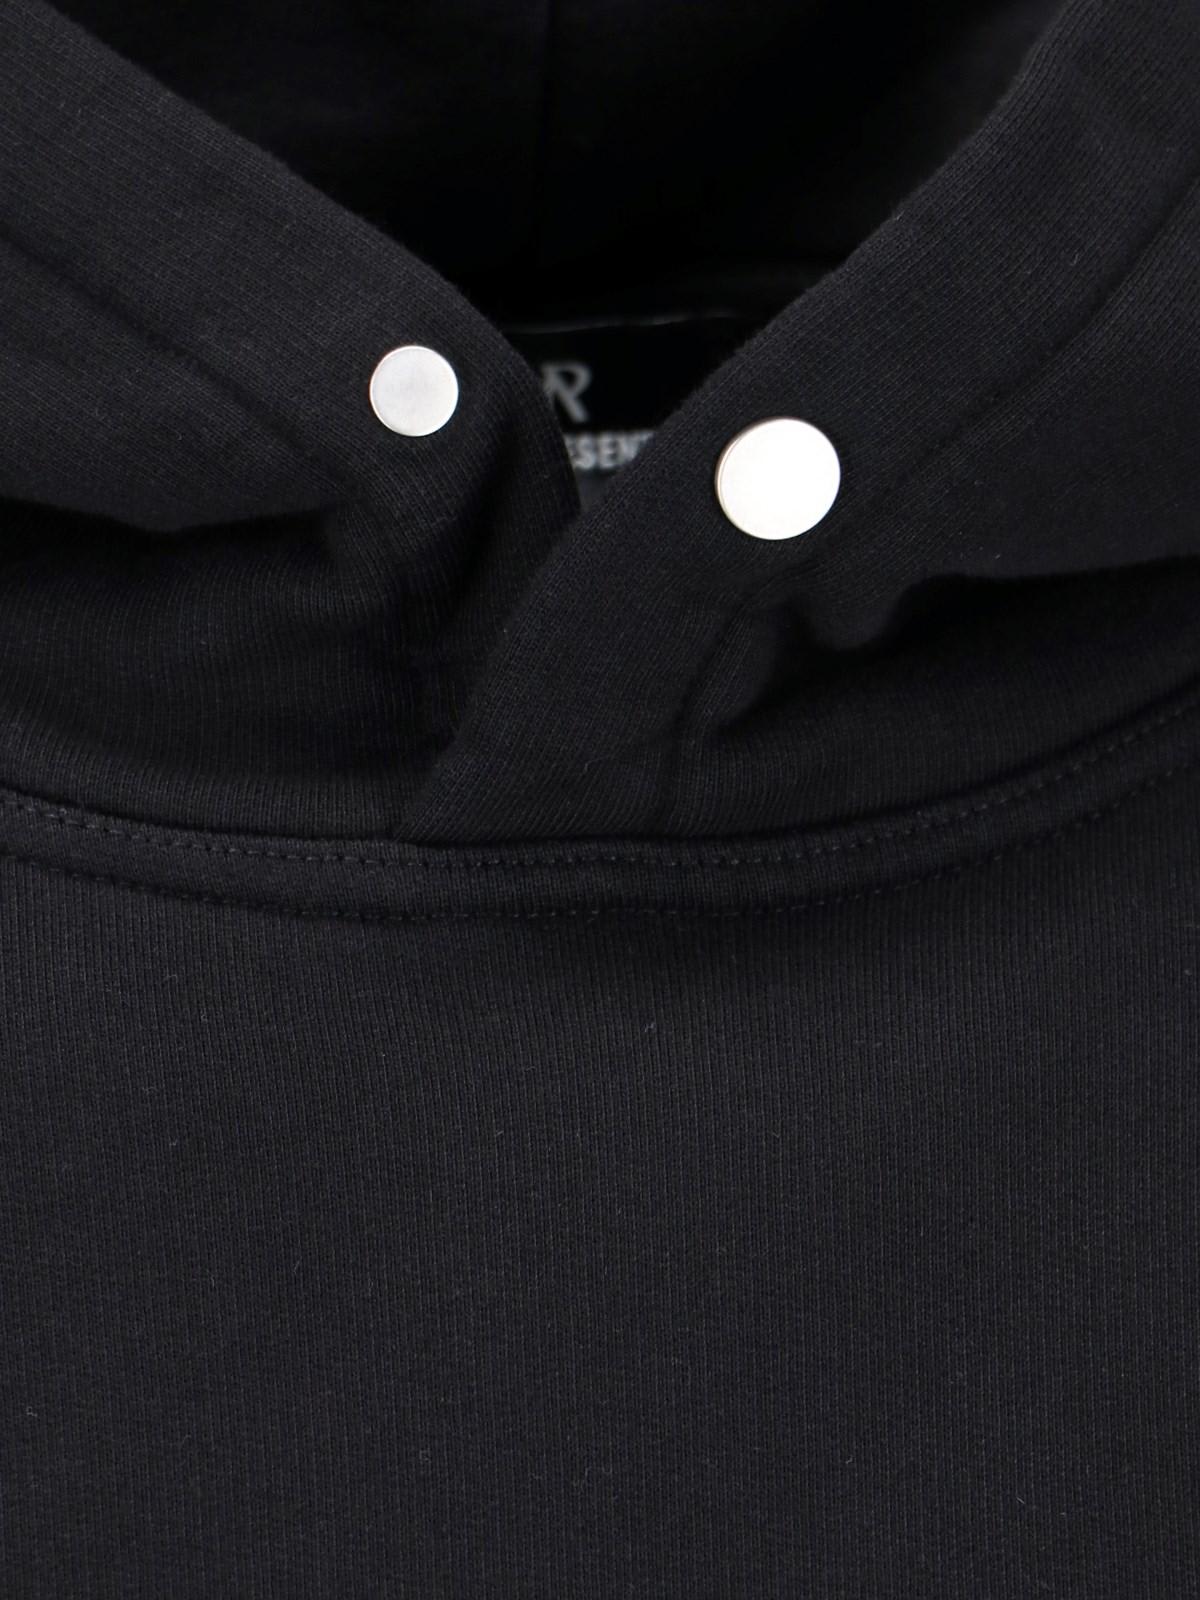 Shop Represent Logo Hoodie In Black